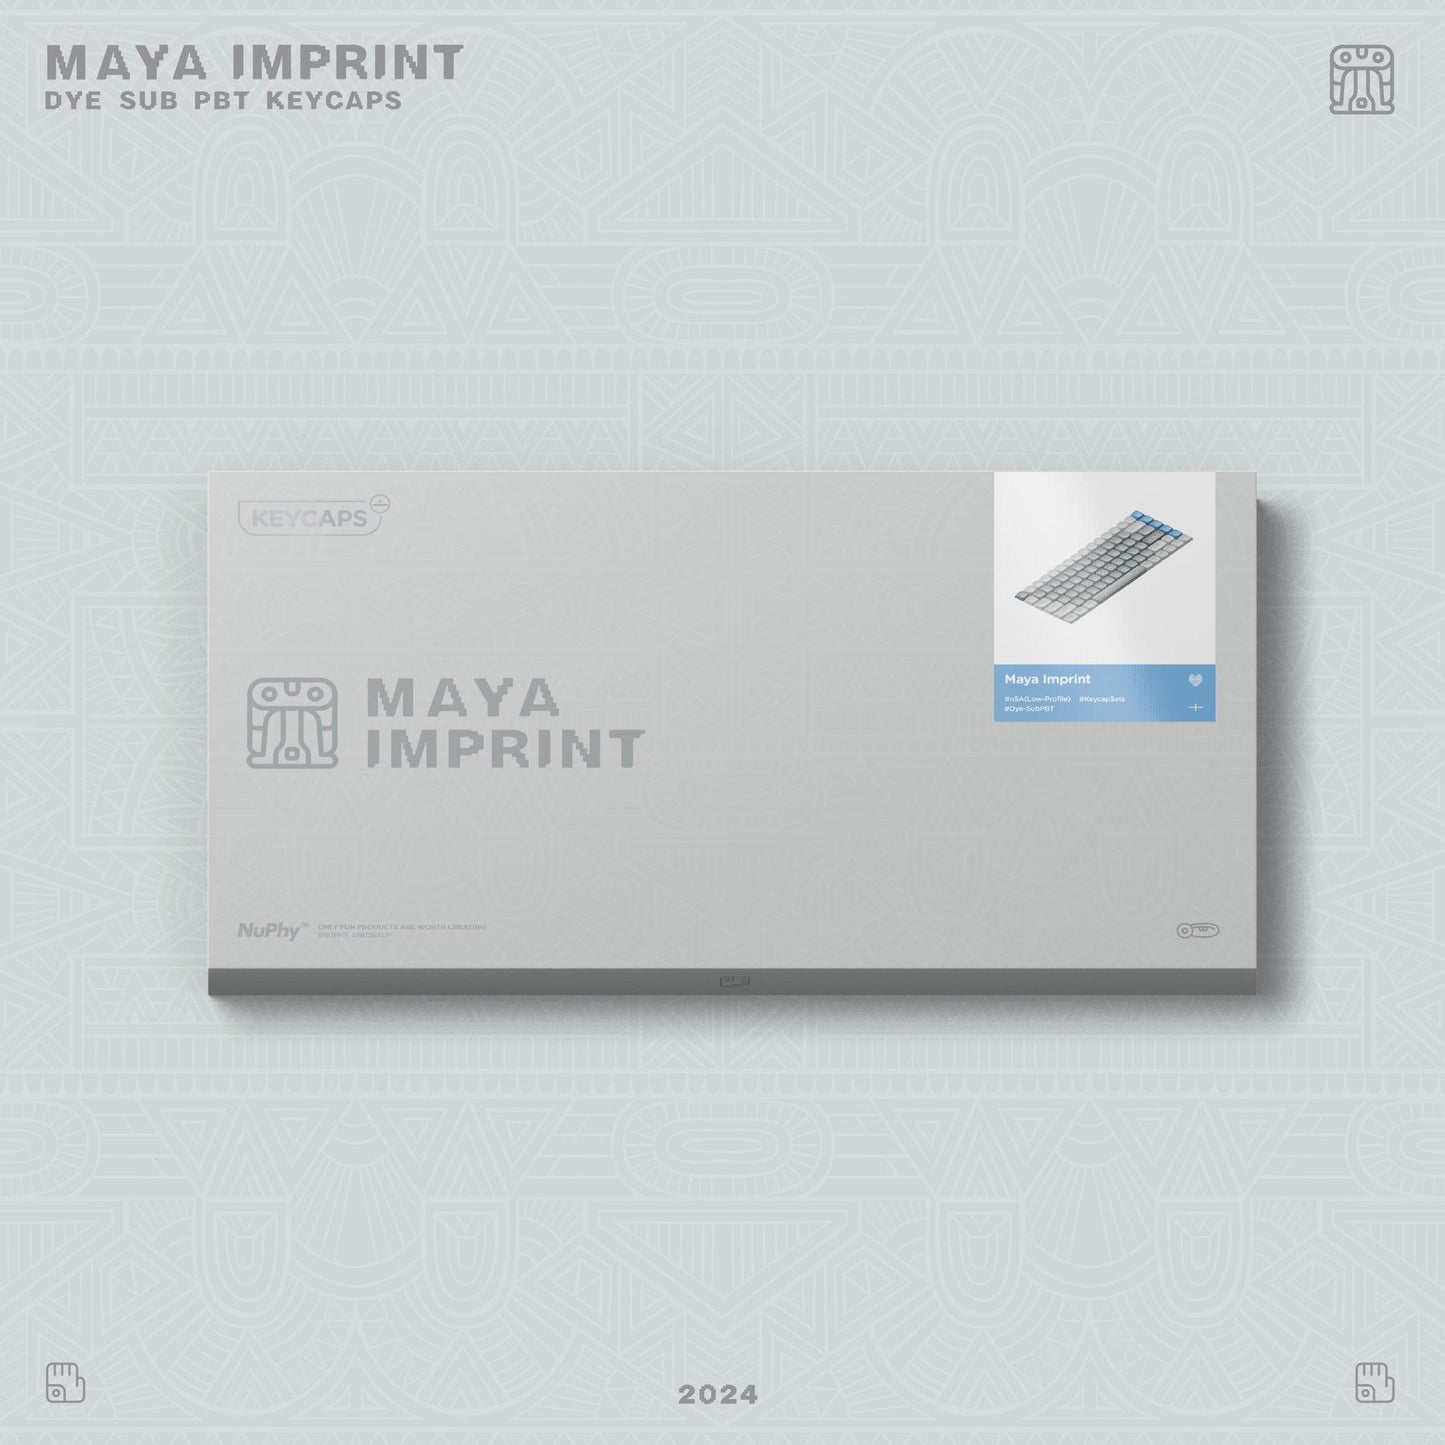 NuPhy x Keytok Maya Imprint nSA Low-Profile Keycaps